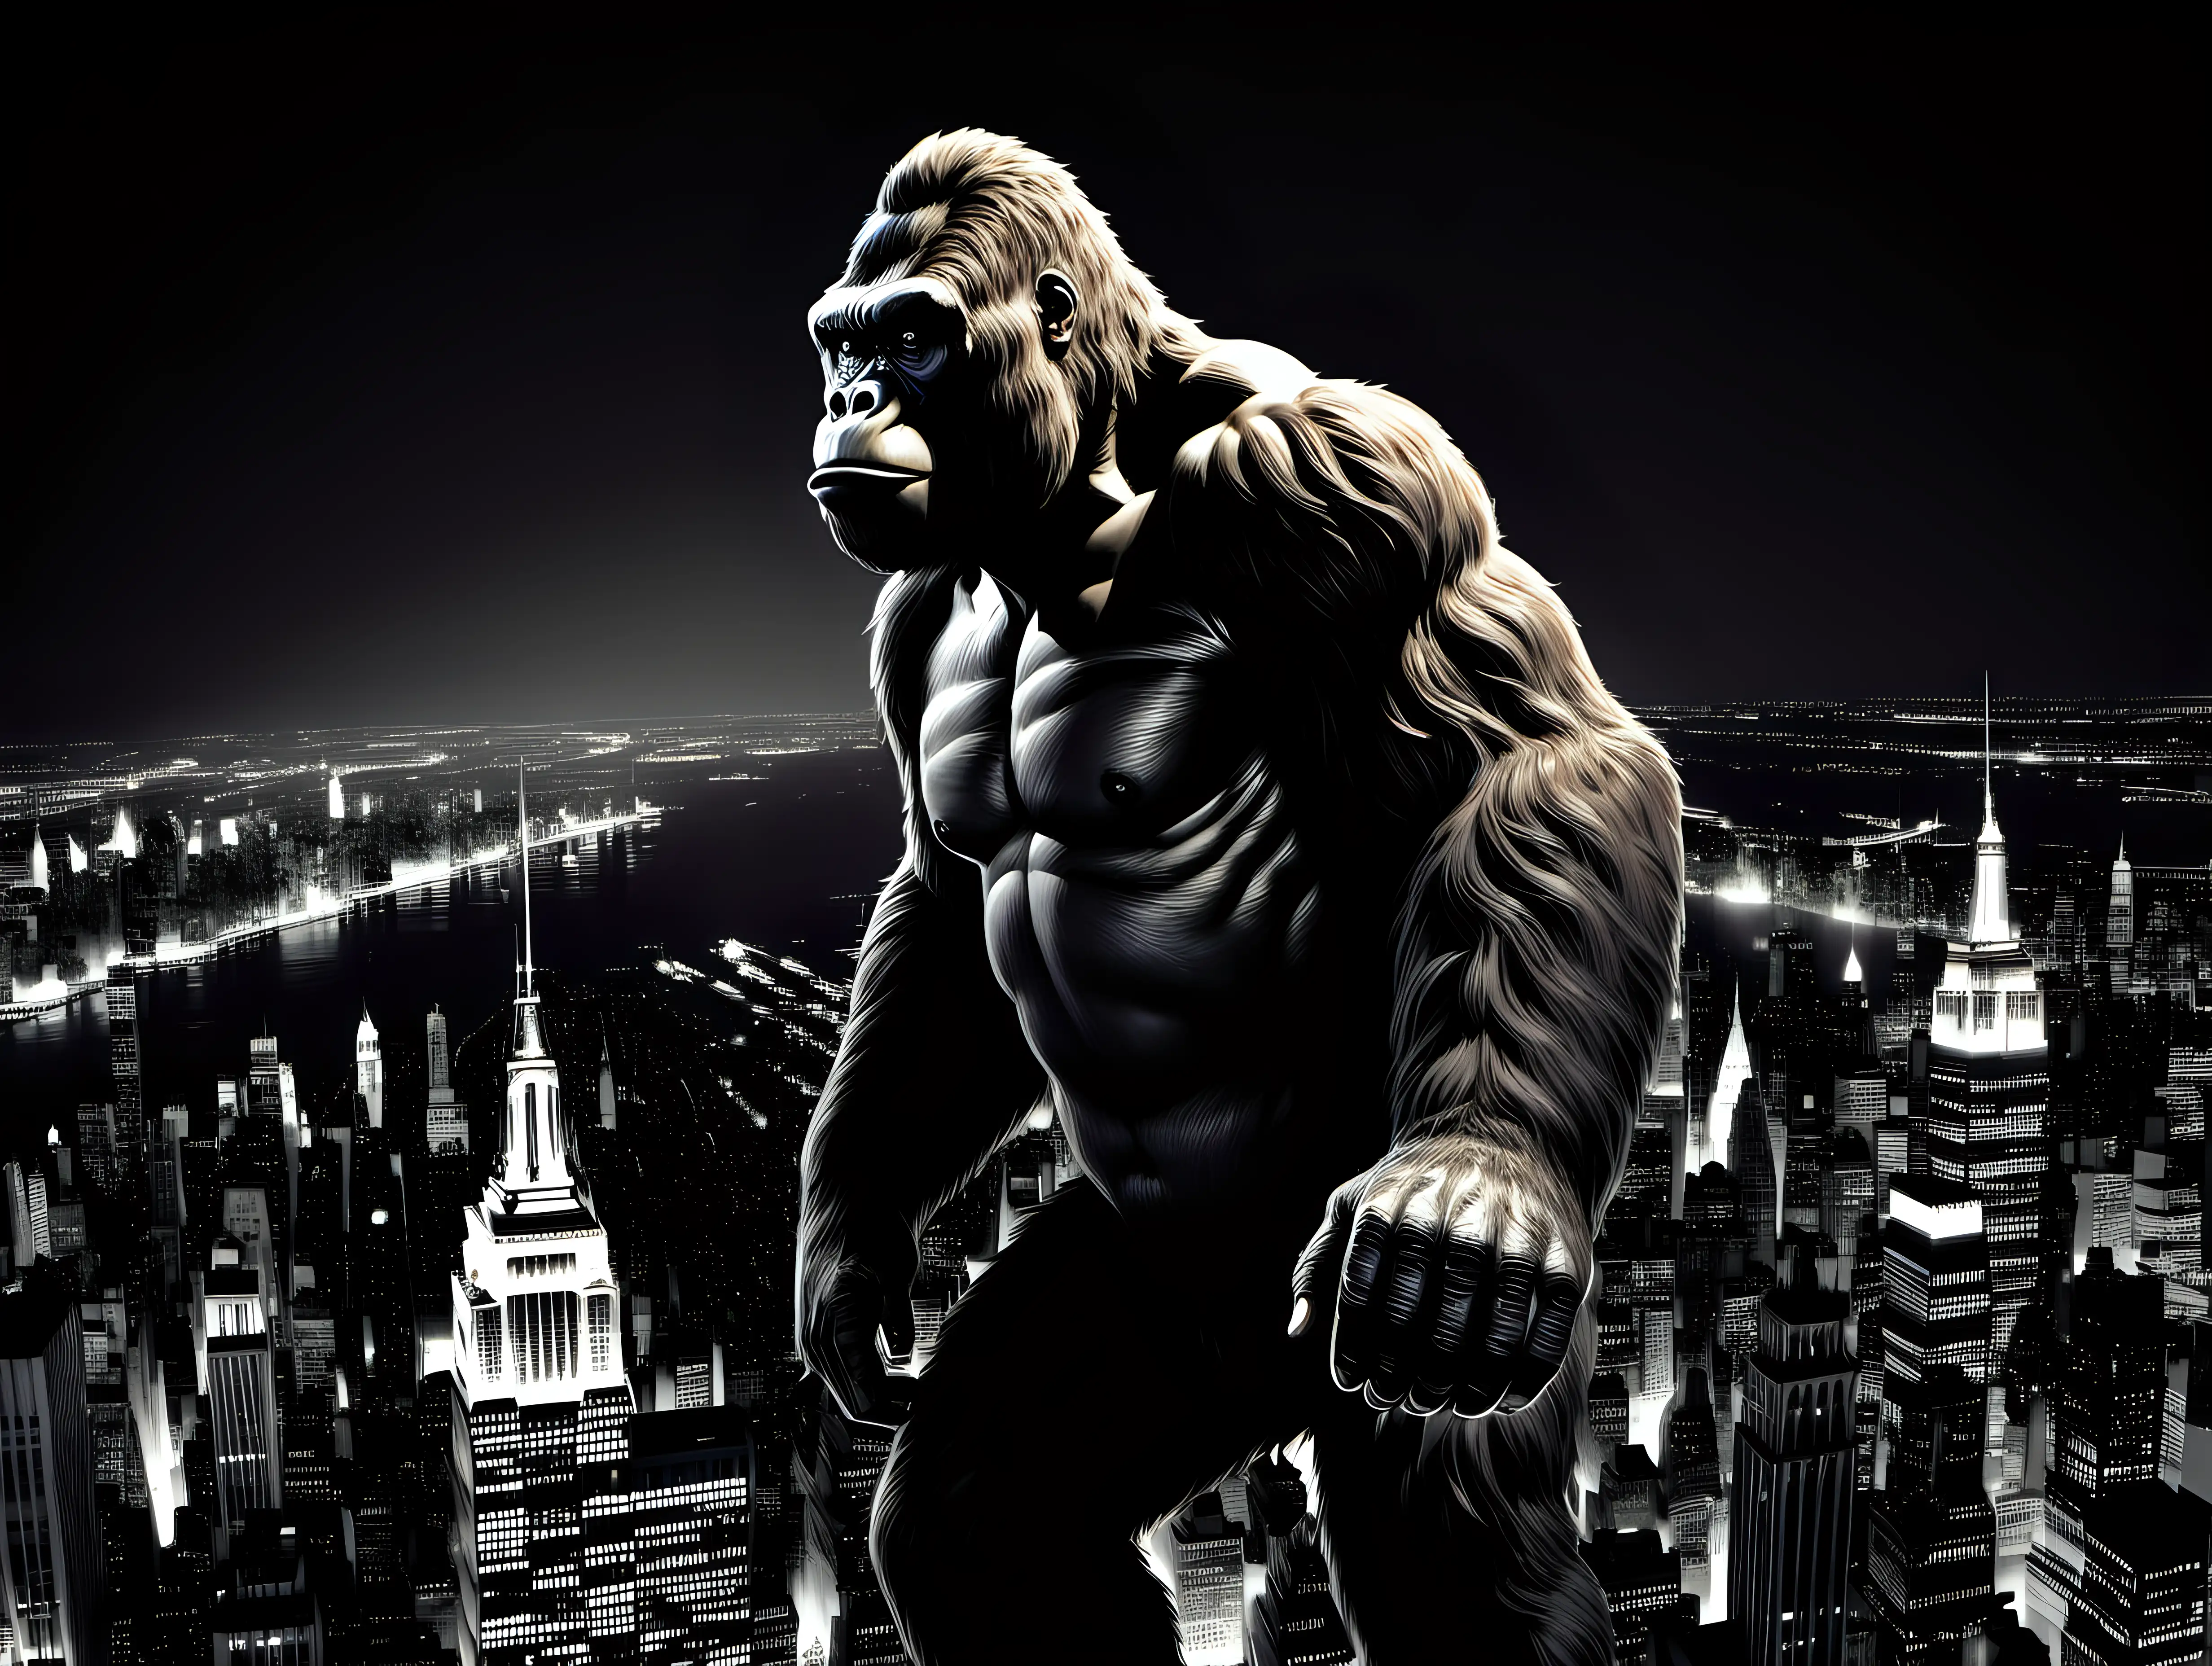 King Kong climbing Empire State building at night